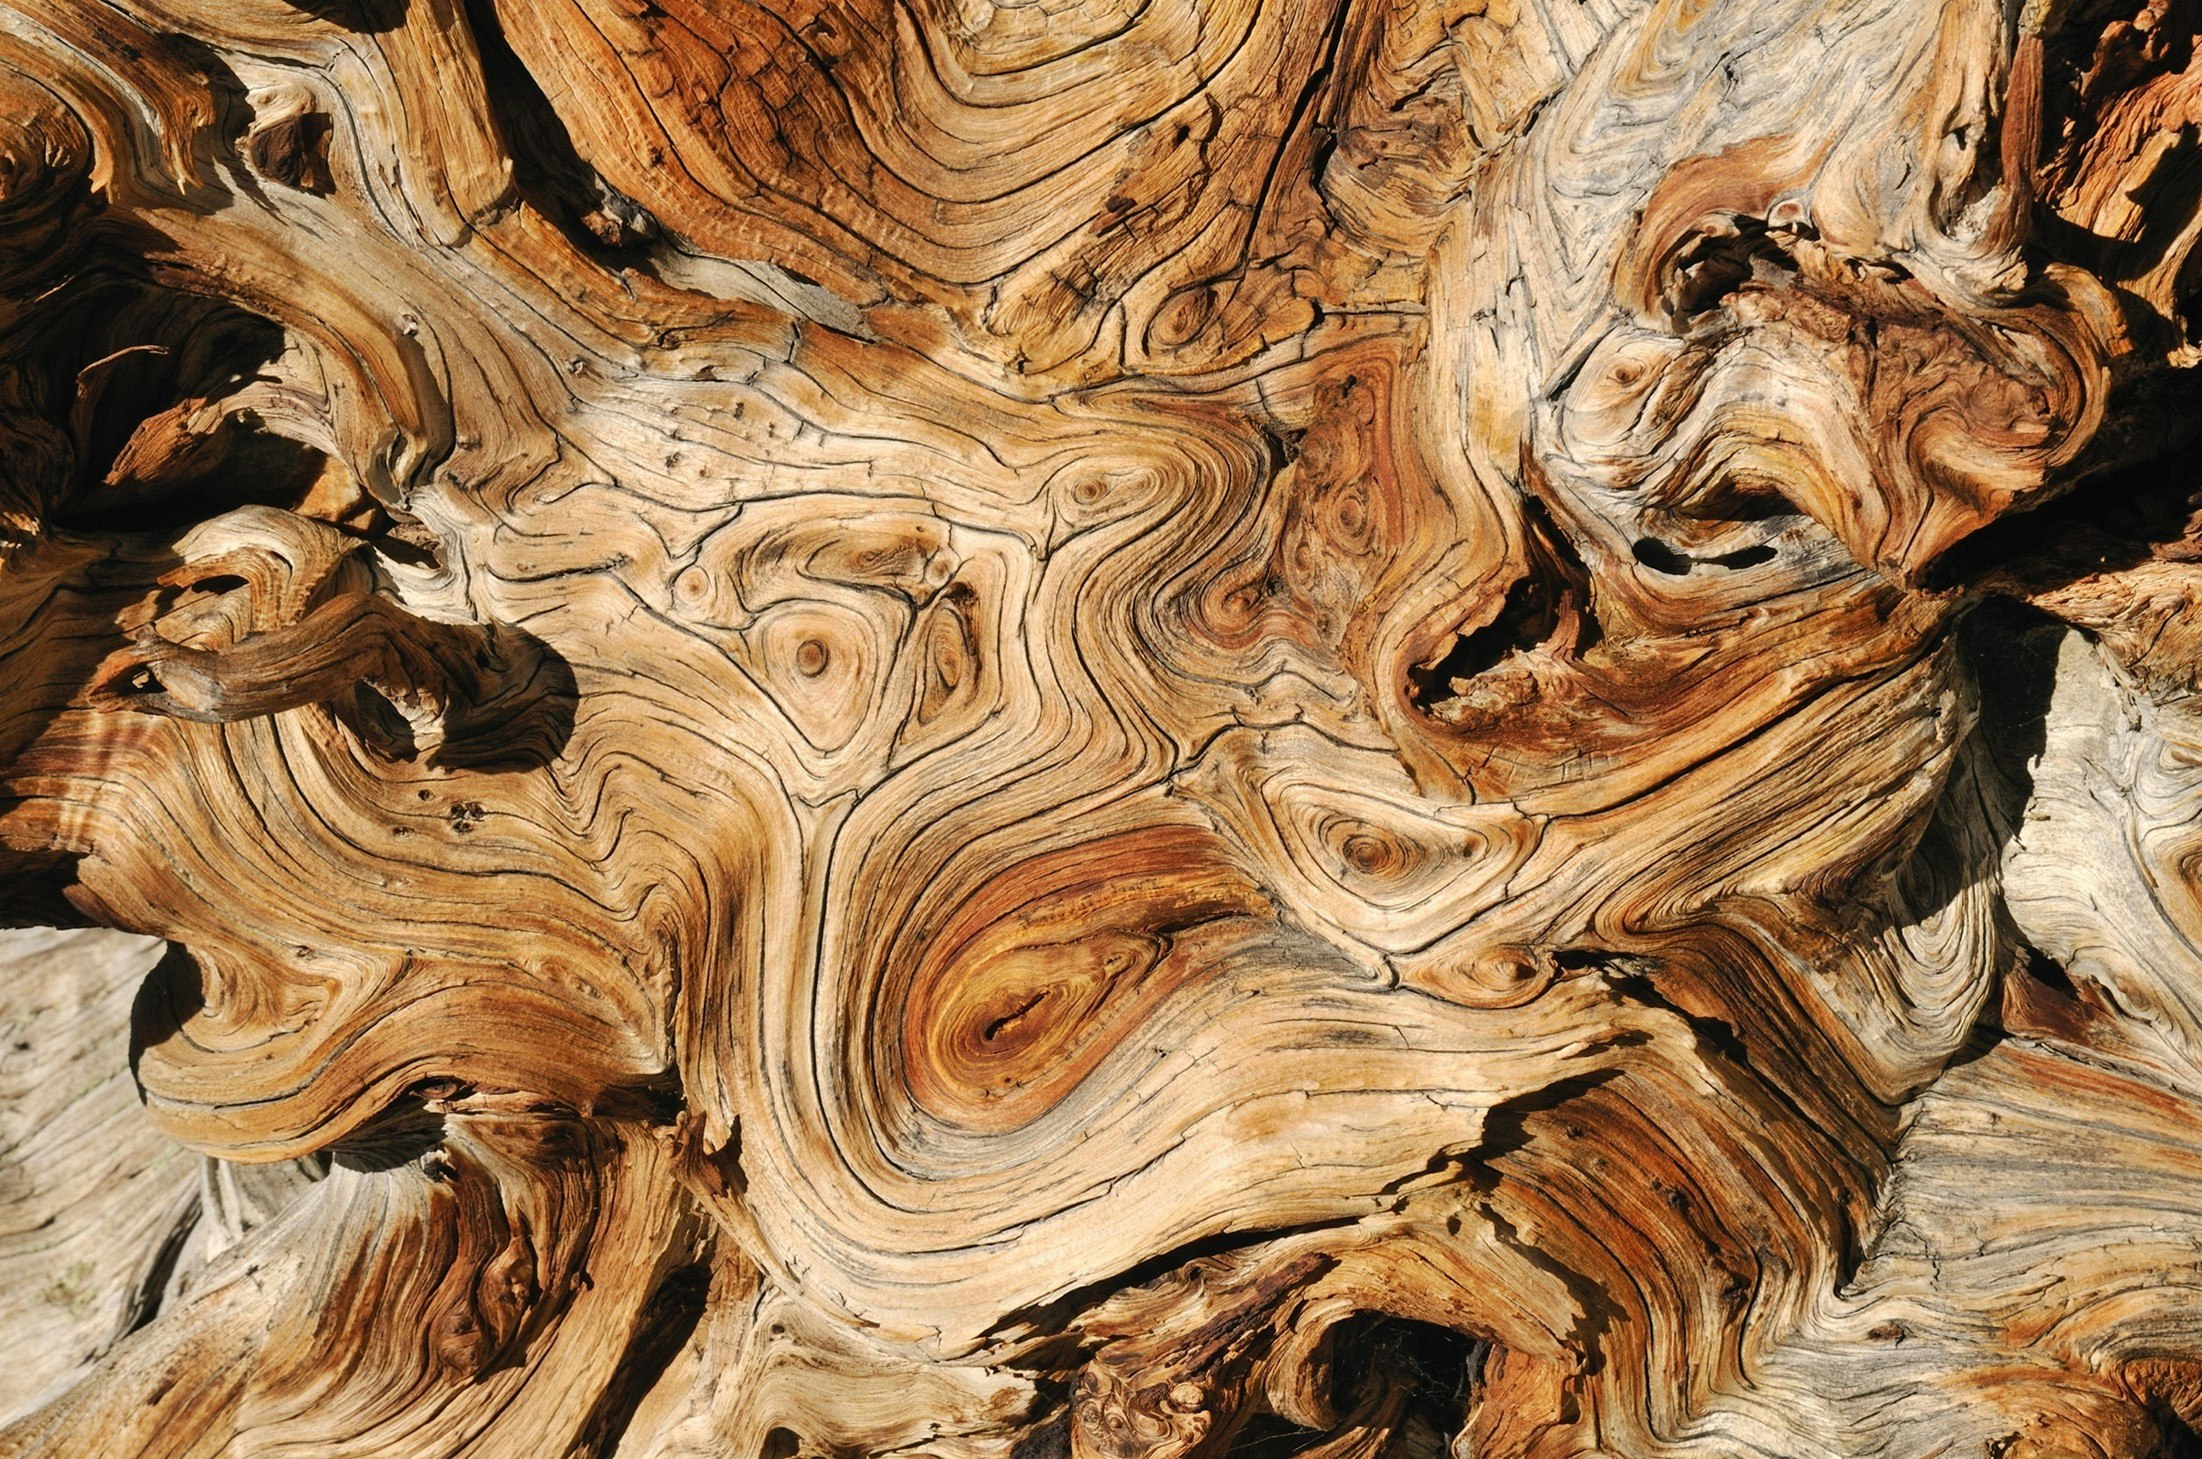 Weathered Wood Of An Ancient Bristlecone Pine (Pinus Longaeva), Great Basin, 2023, Tiffany Shlain and Ken Goldberg. Photograph. Stock media provided by [imageBROKER]/ Pond5.